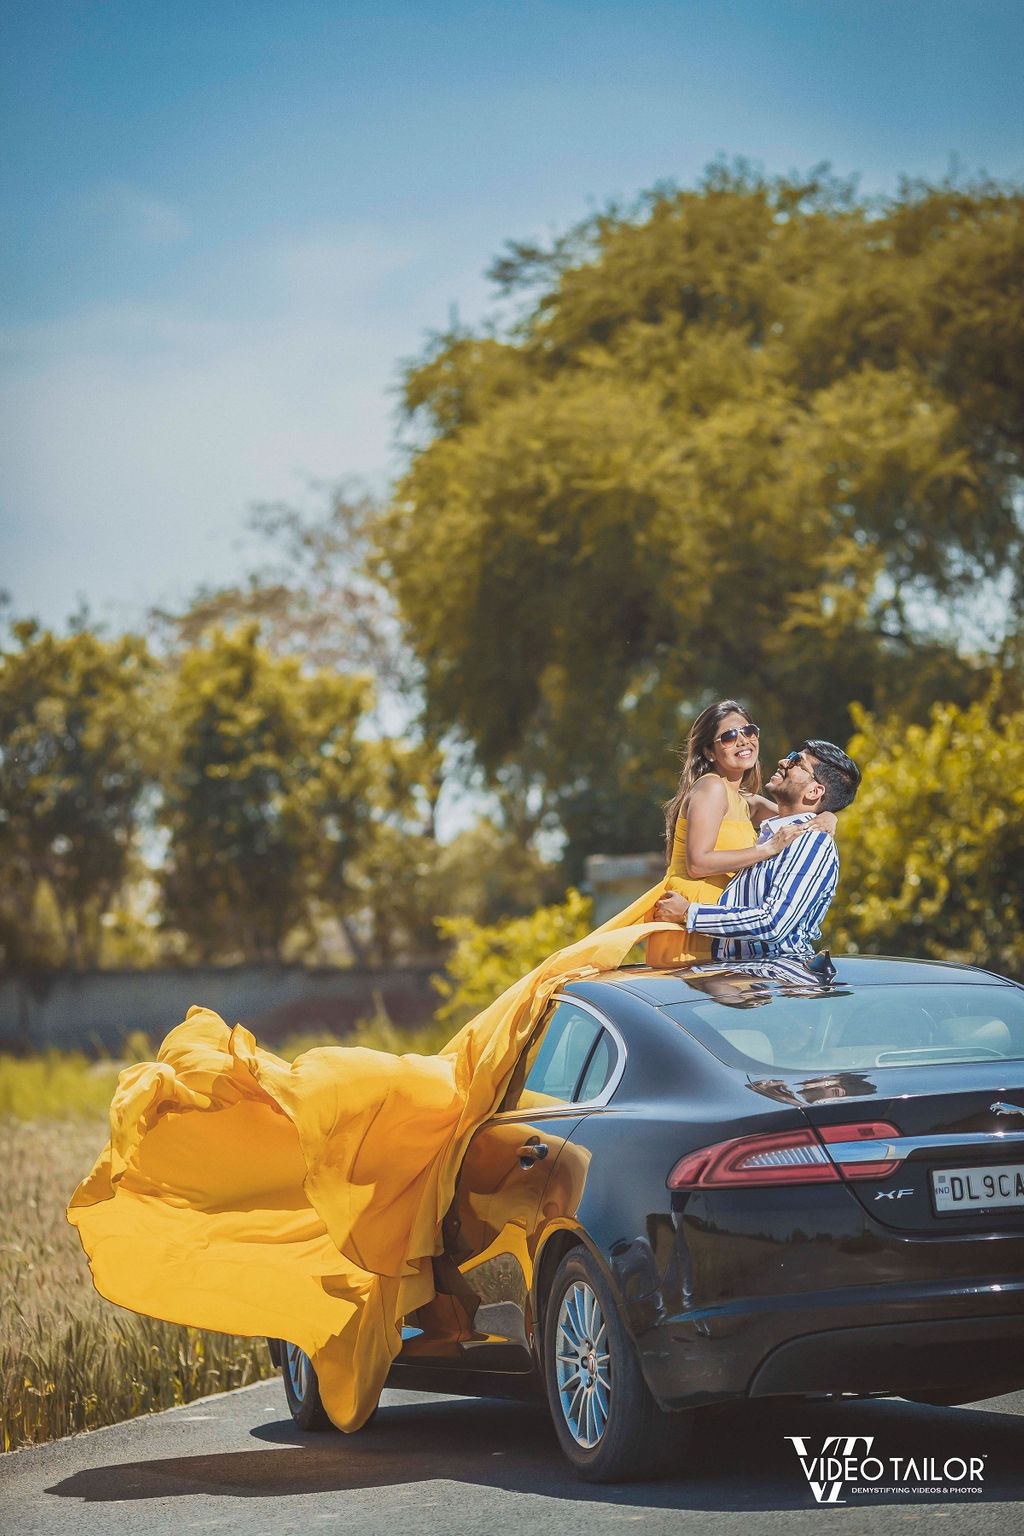 1963 Chevrolet Impala - Pre Wedding shoot in Goa India | Wedding shoot,  Classic cars vintage, Pre wedding shoot ideas